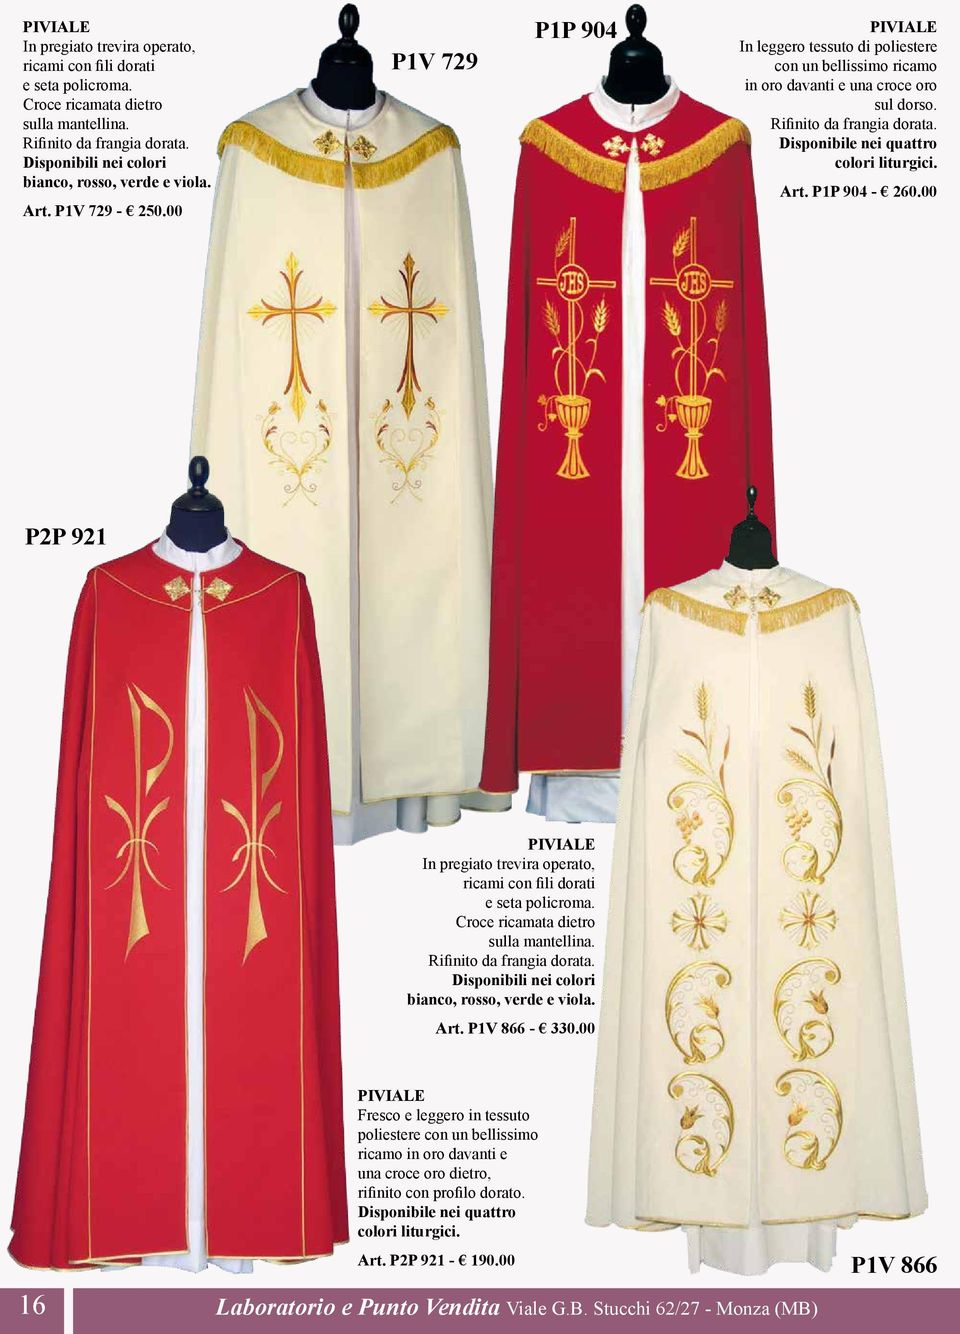 Disponibile nei quattro colori liturgici. Art. P1P 904-260.00 P2P 921  Art. P1V 866-330.